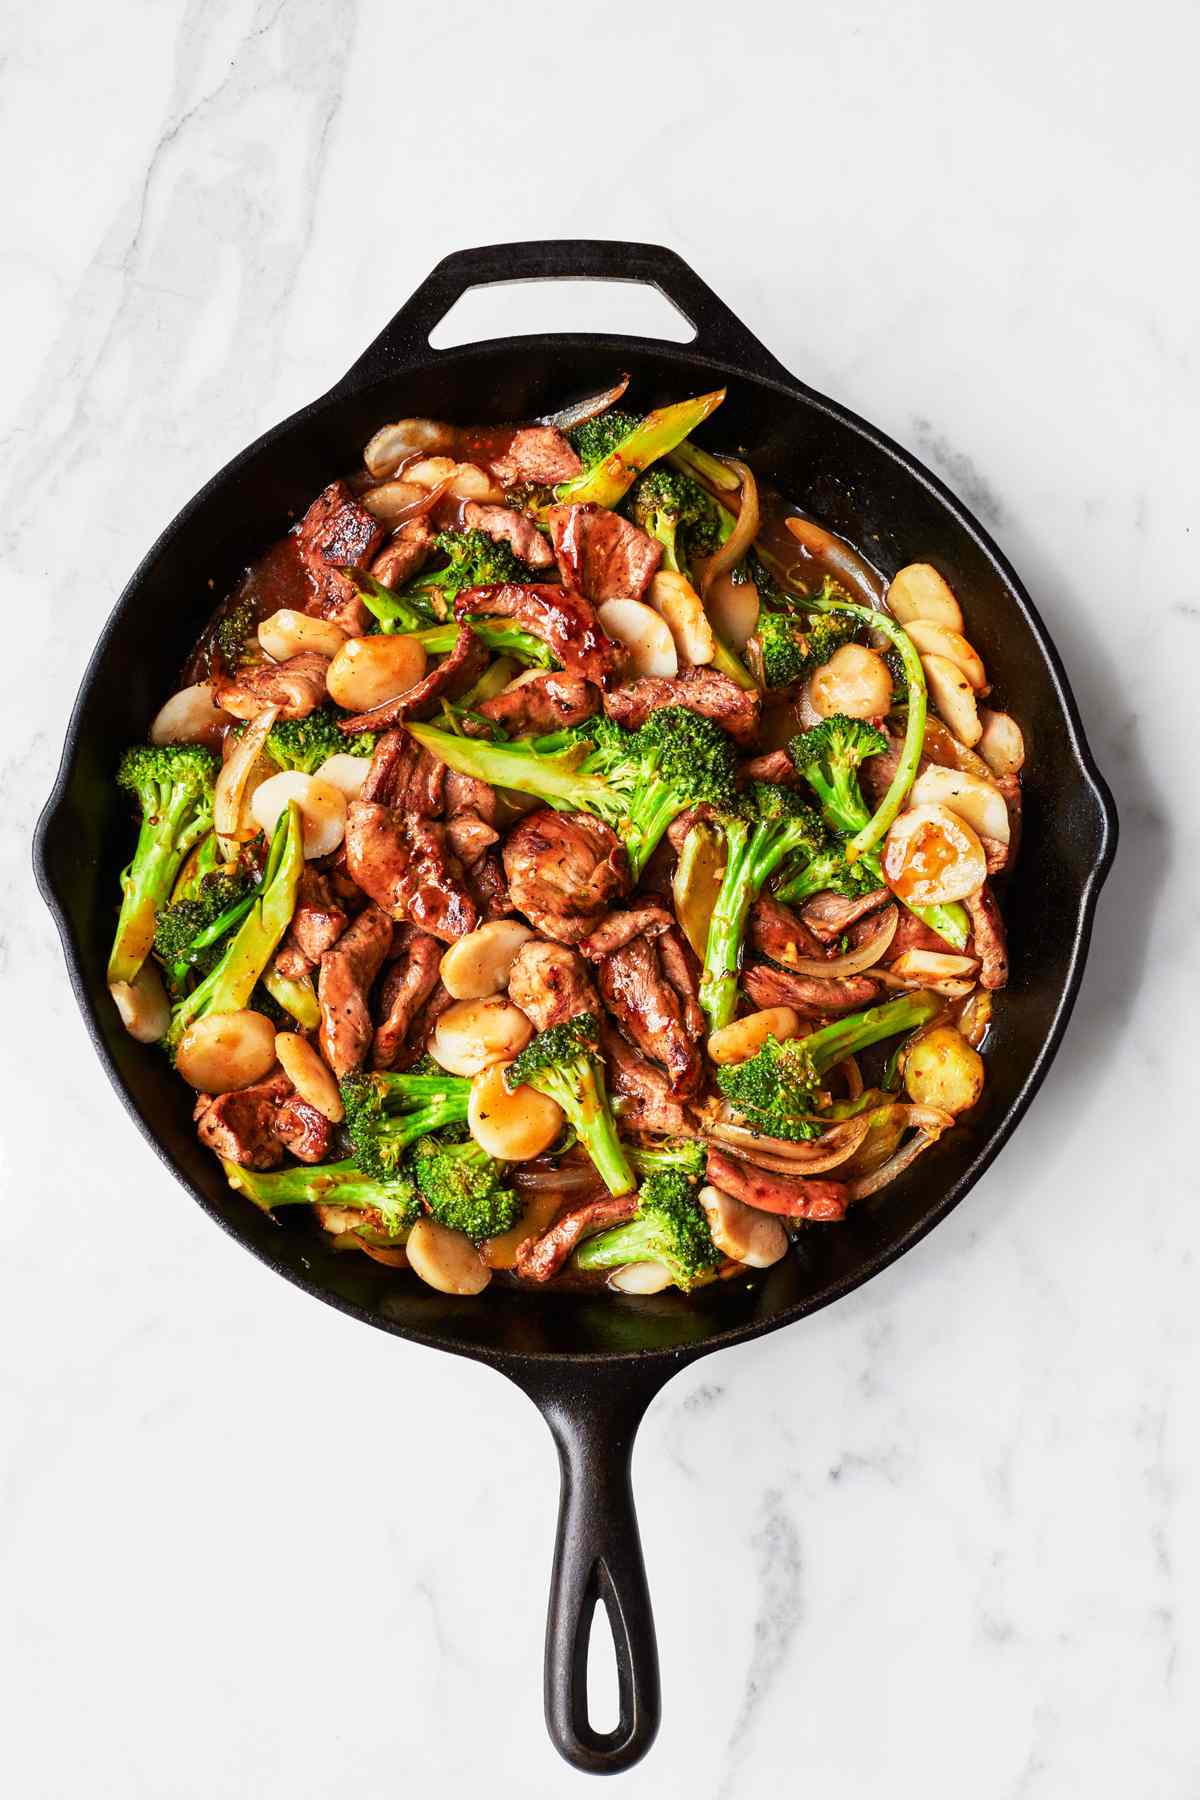 pork-and-broccoli stir-fry